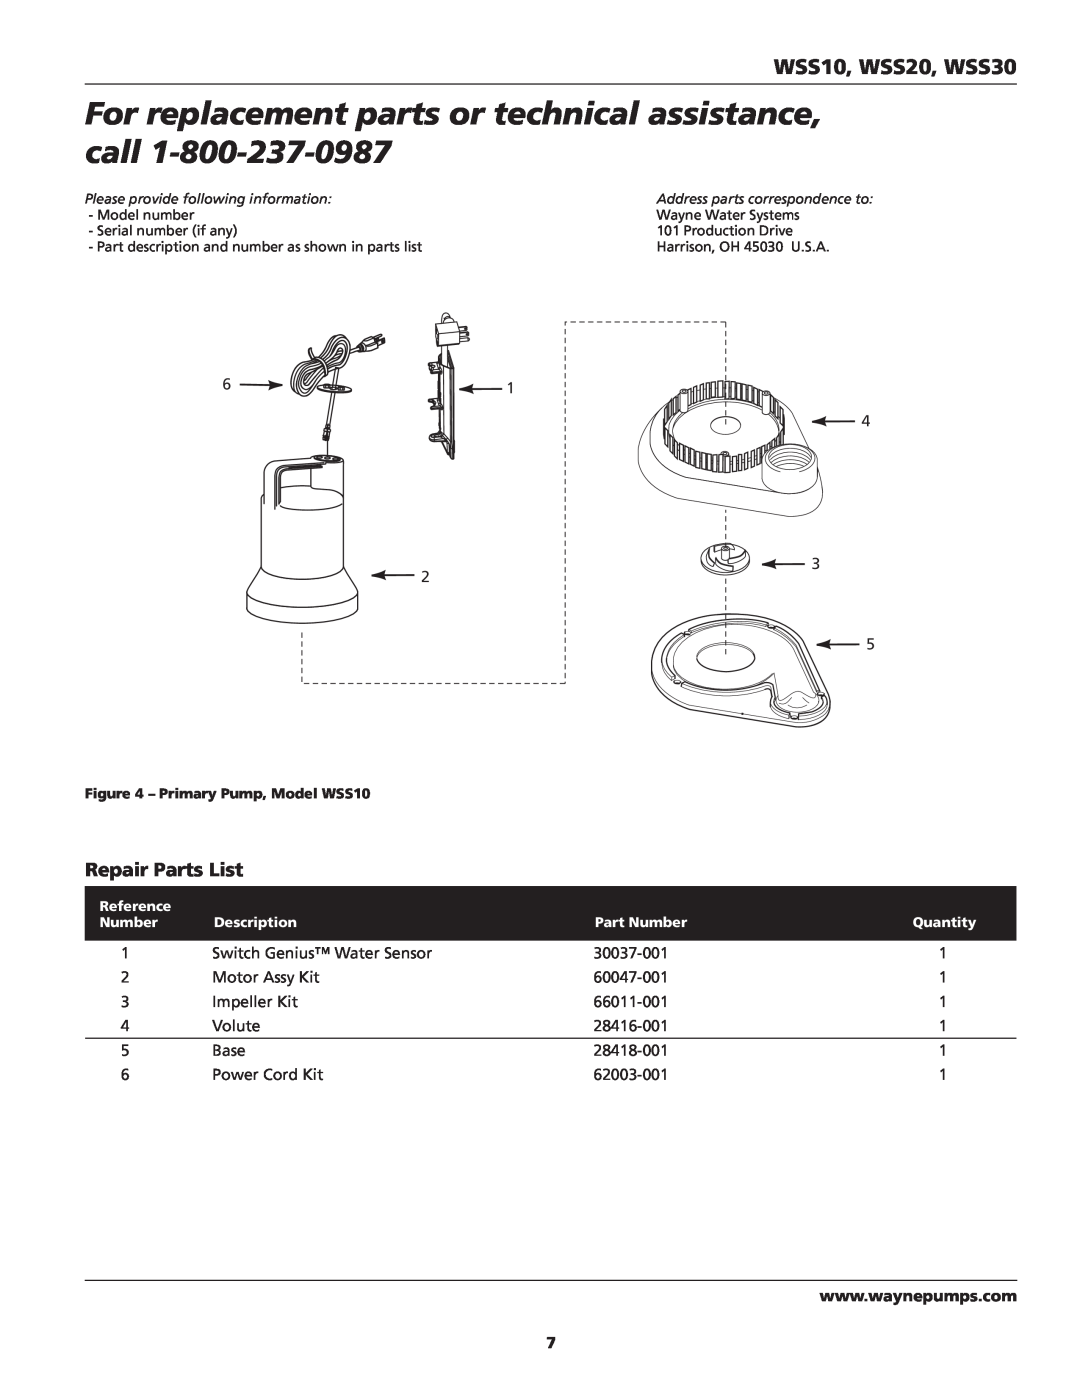 Wayne 353501-001 specifications Repair Parts List, WSS10, WSS20, WSS30 